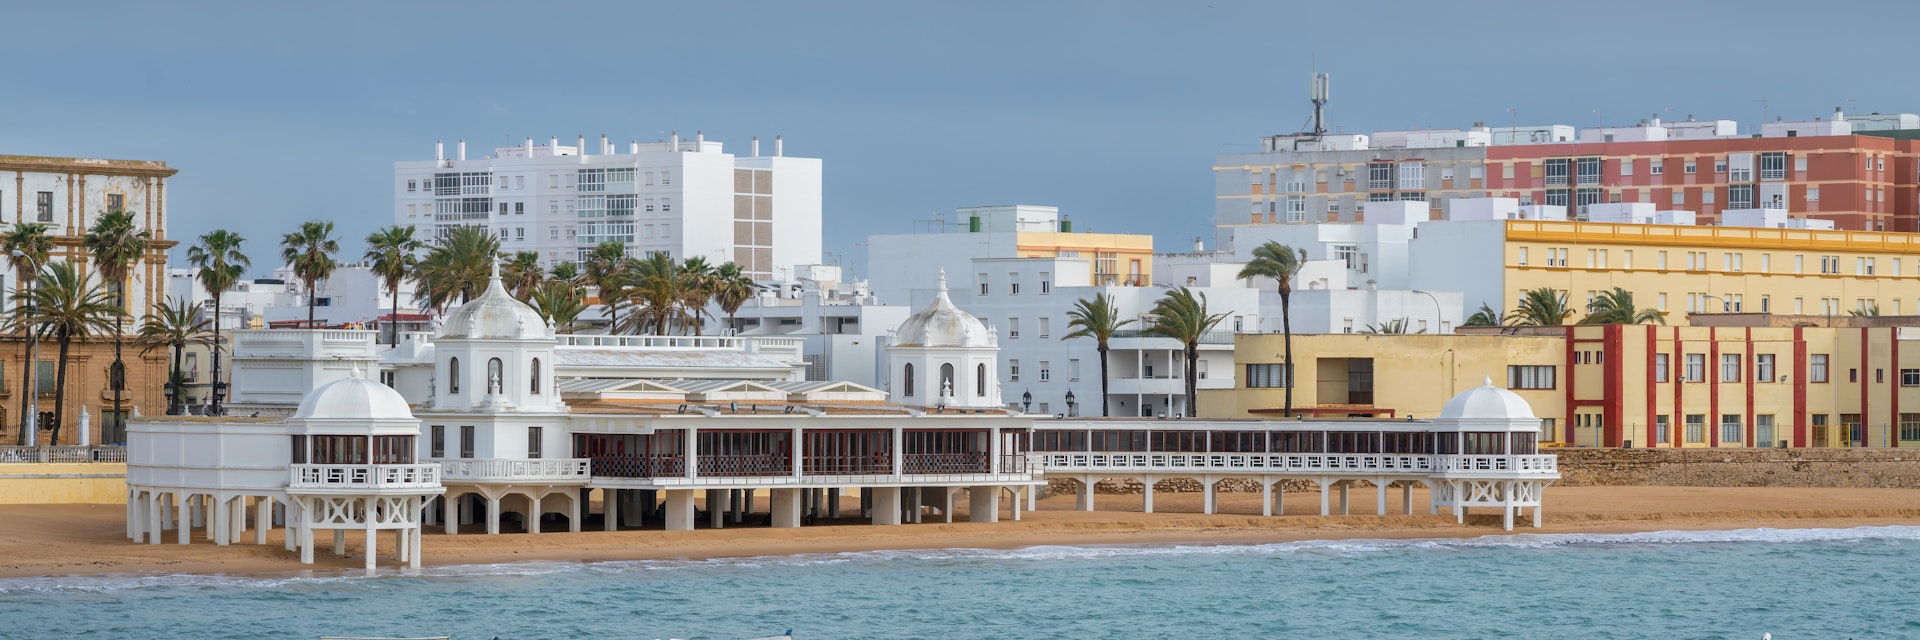 La Caleta Beach and Balneario de la Palma Building - Cadiz, Andalusia, Spain.